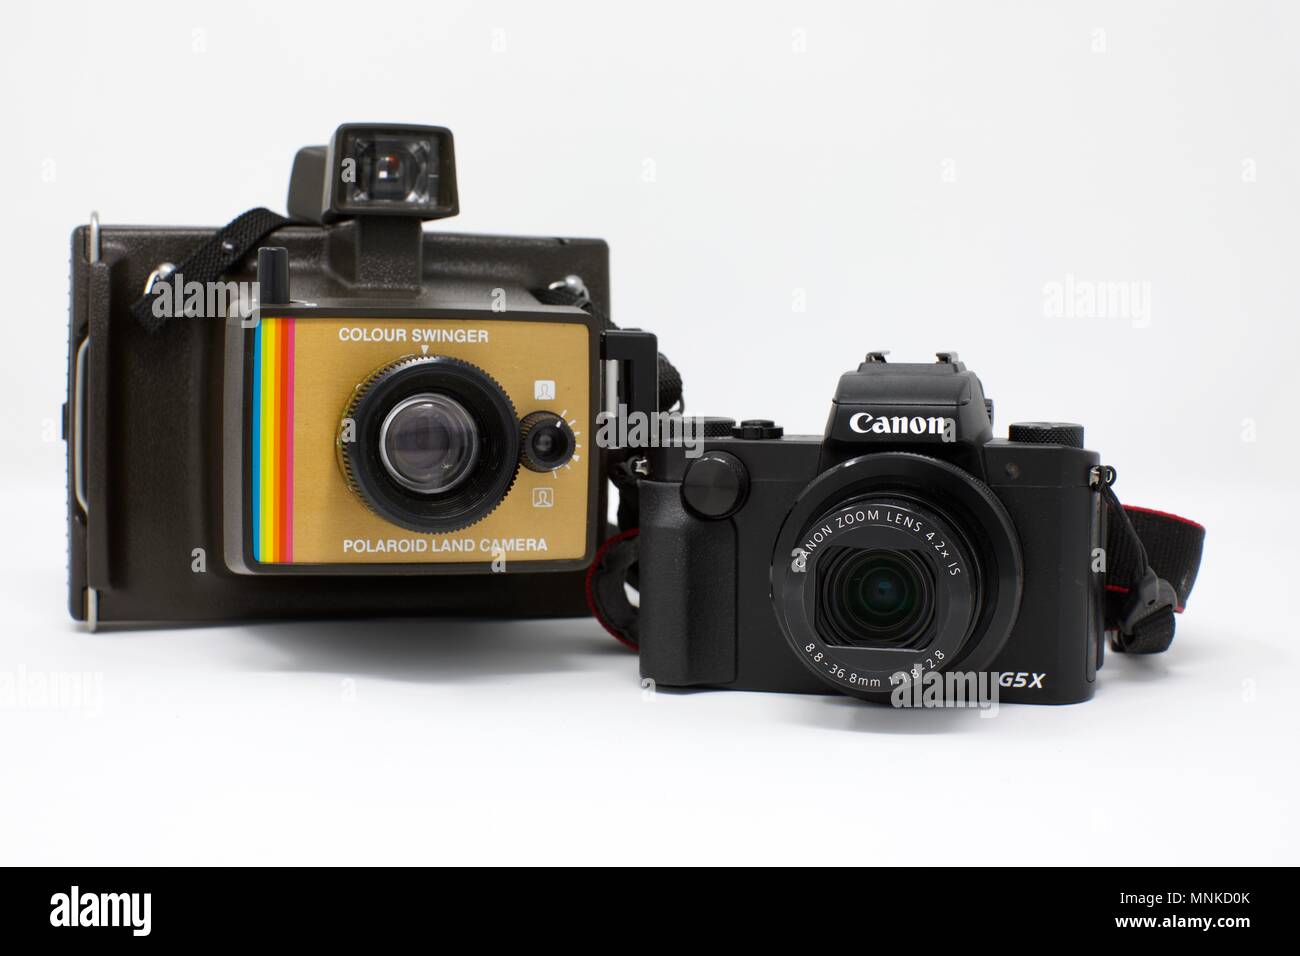 1975 Polaroid Colour Swinger Camera next to a modern Canon PowerShot G5 X  Camera Stock Photo - Alamy